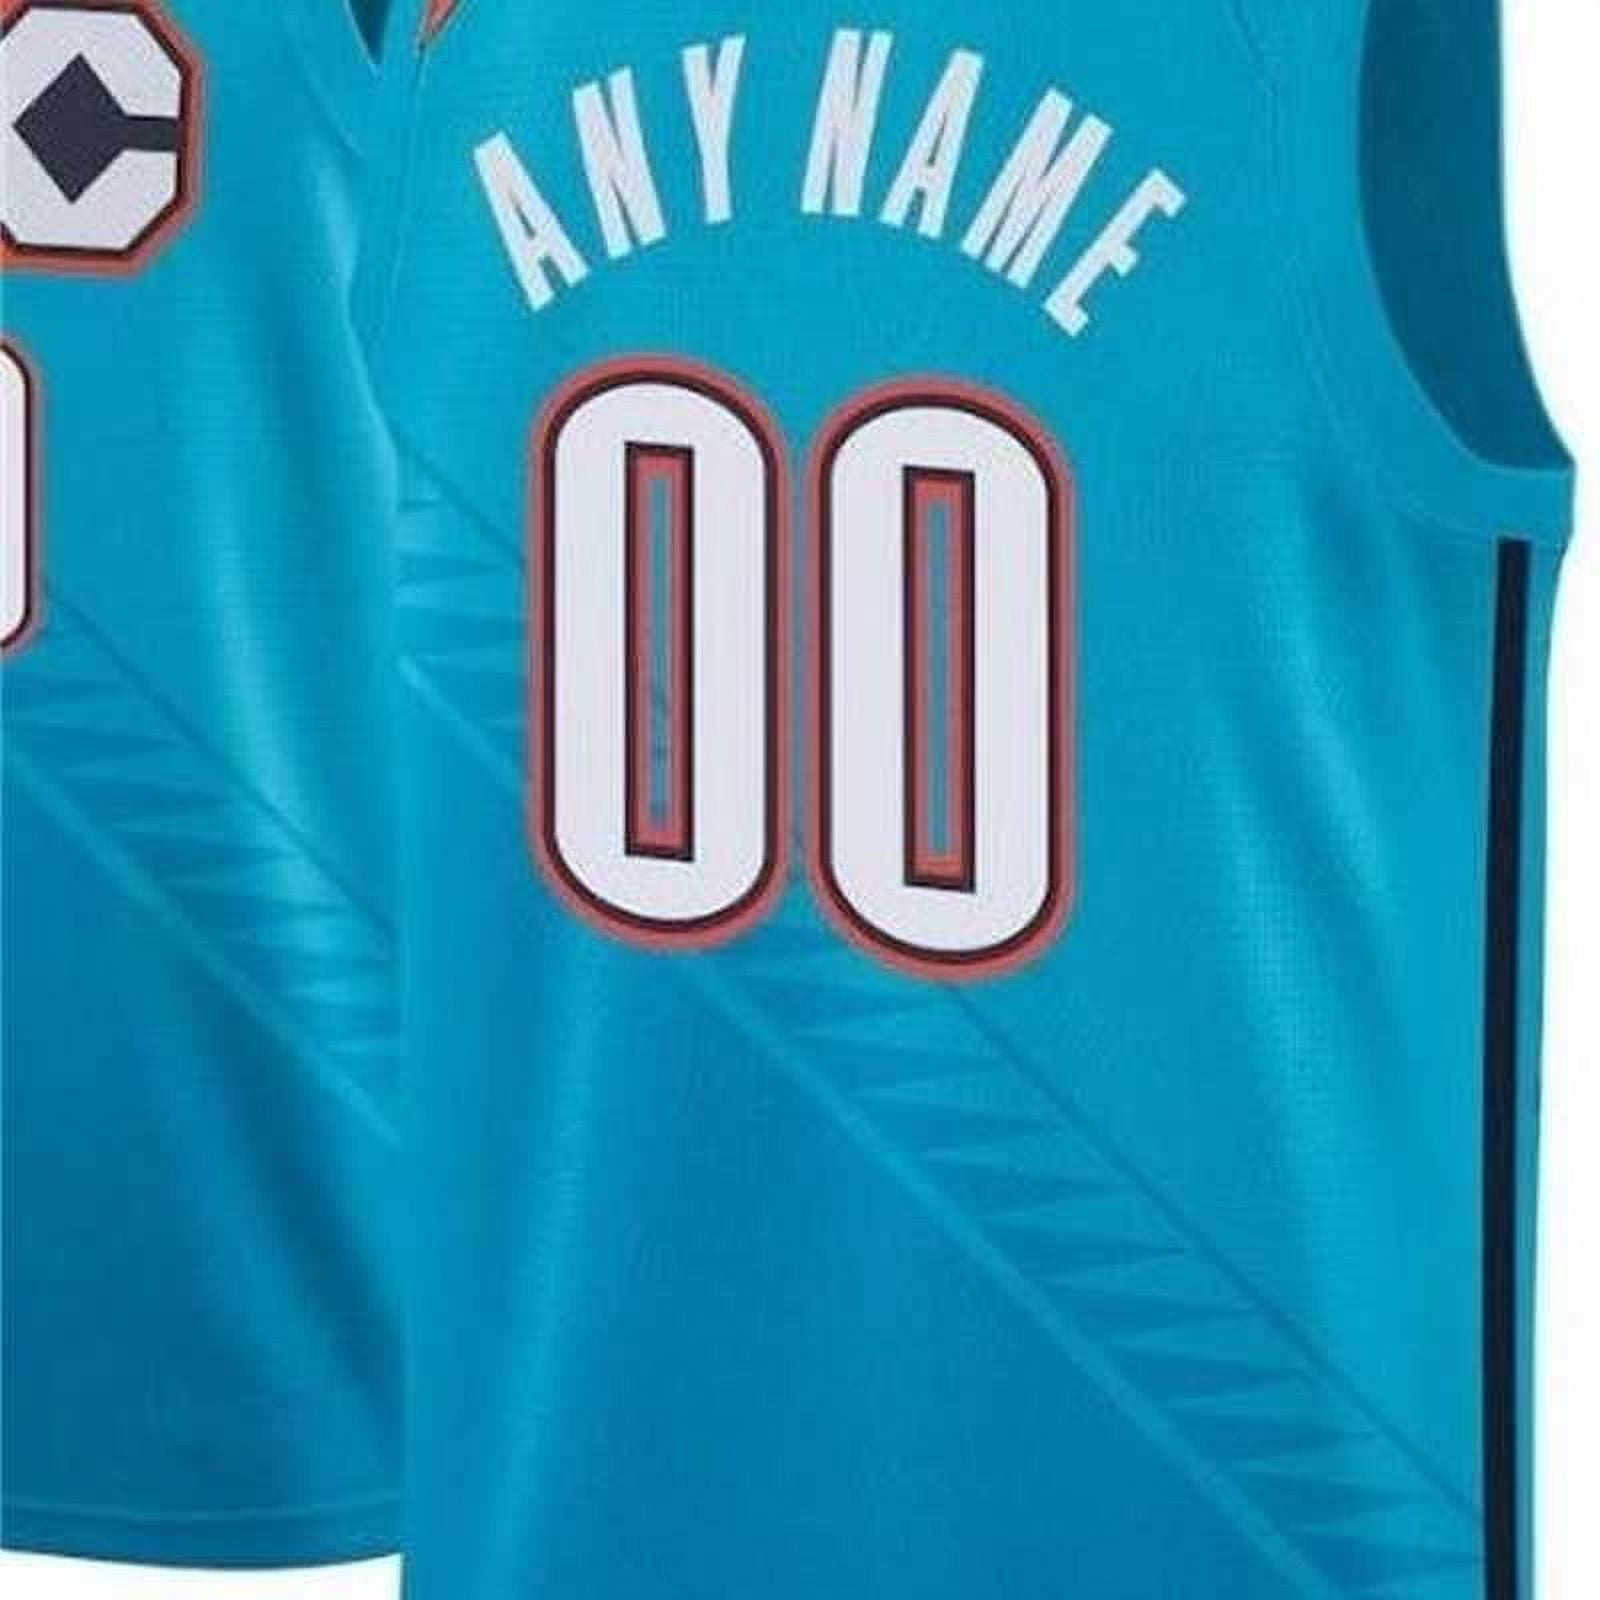 NBA Buzz - OKC Thunder's “City Edition” uniforms for the